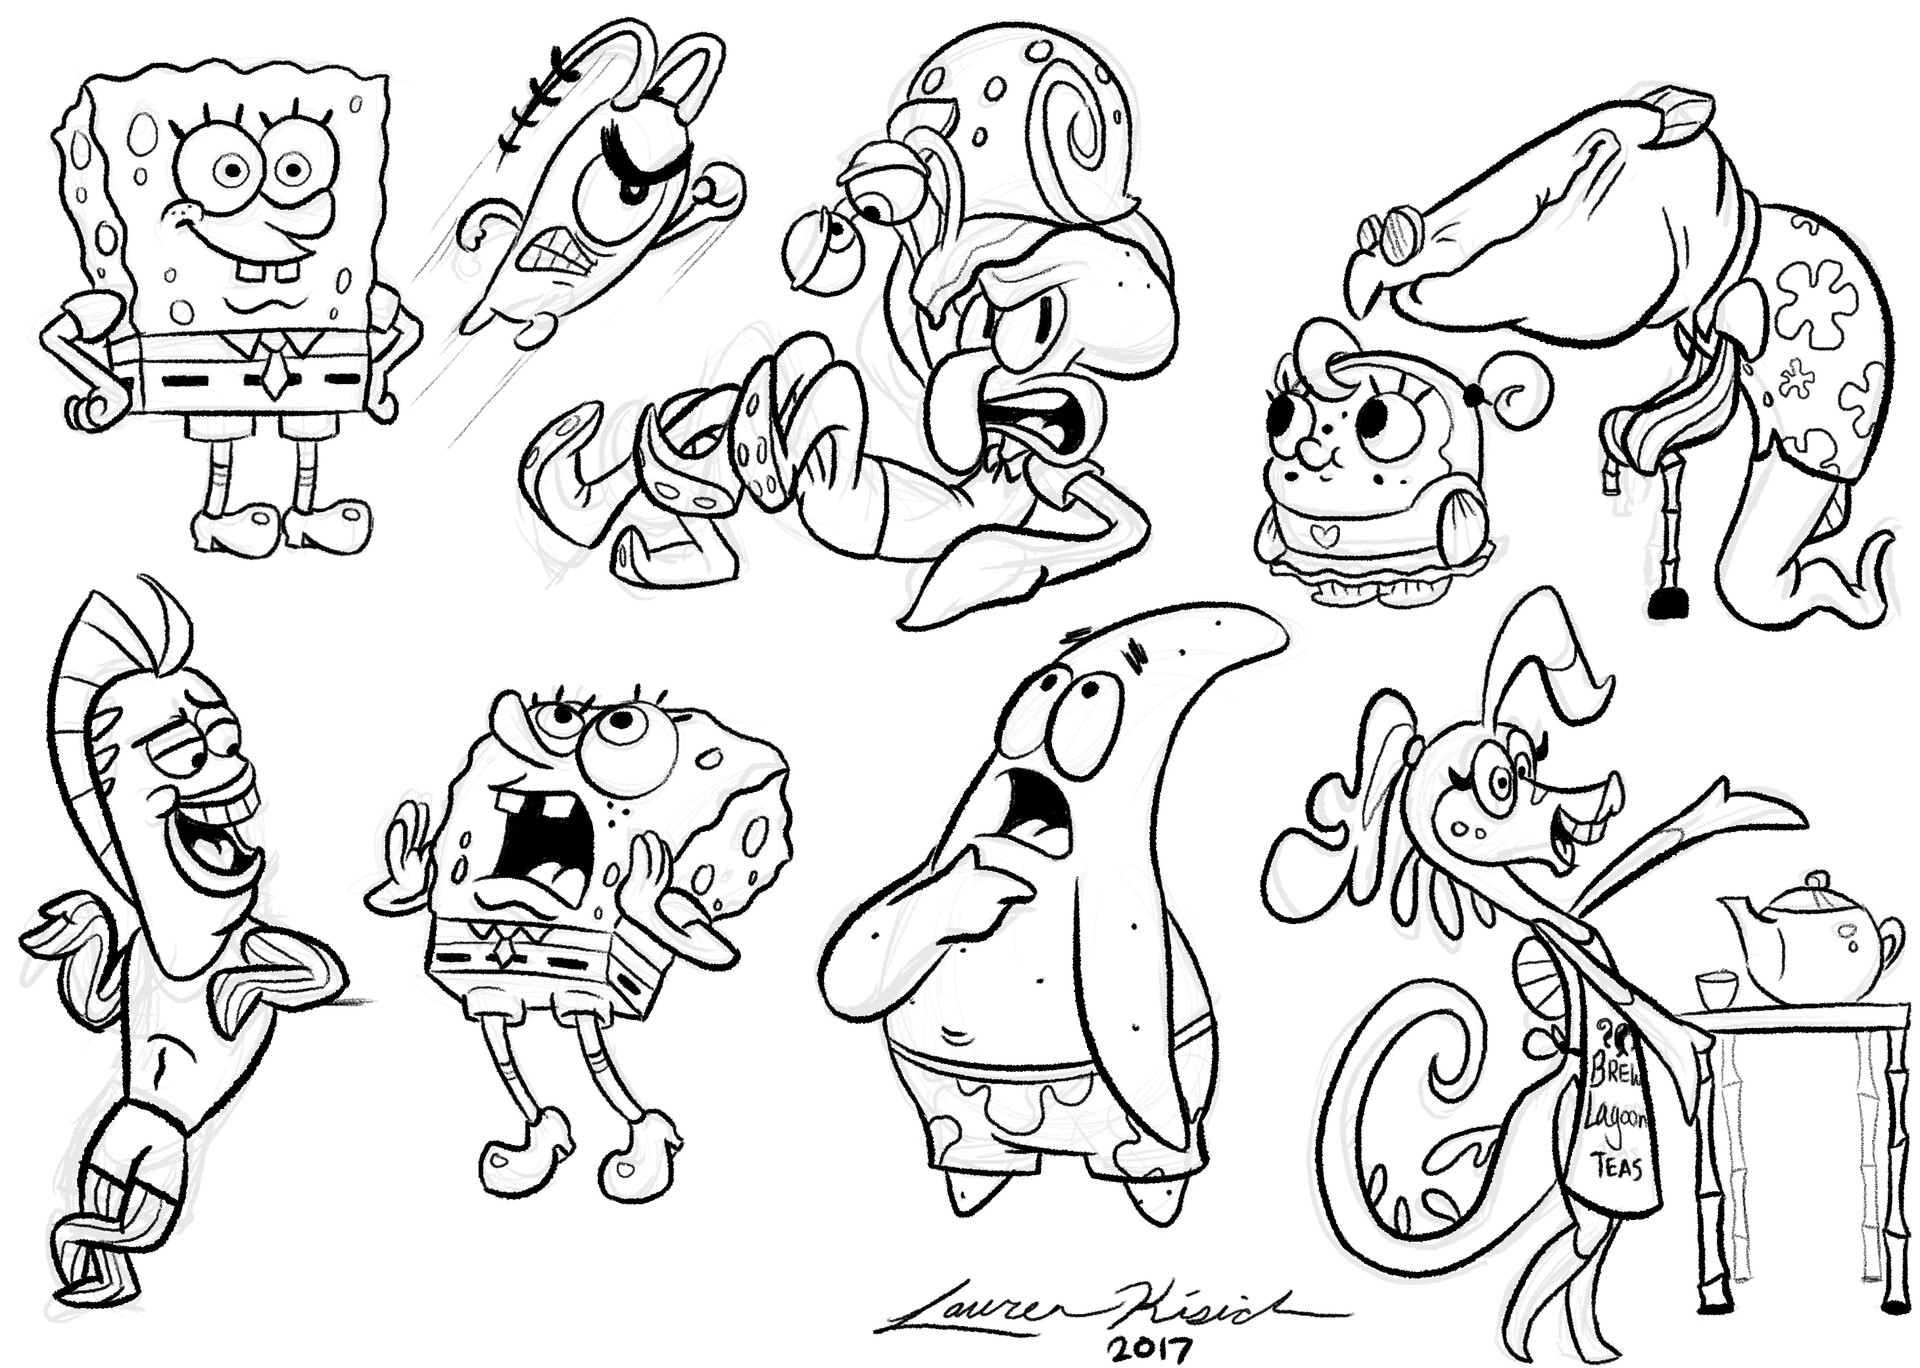 ArtStation - Spongebob Squarepants Character Design